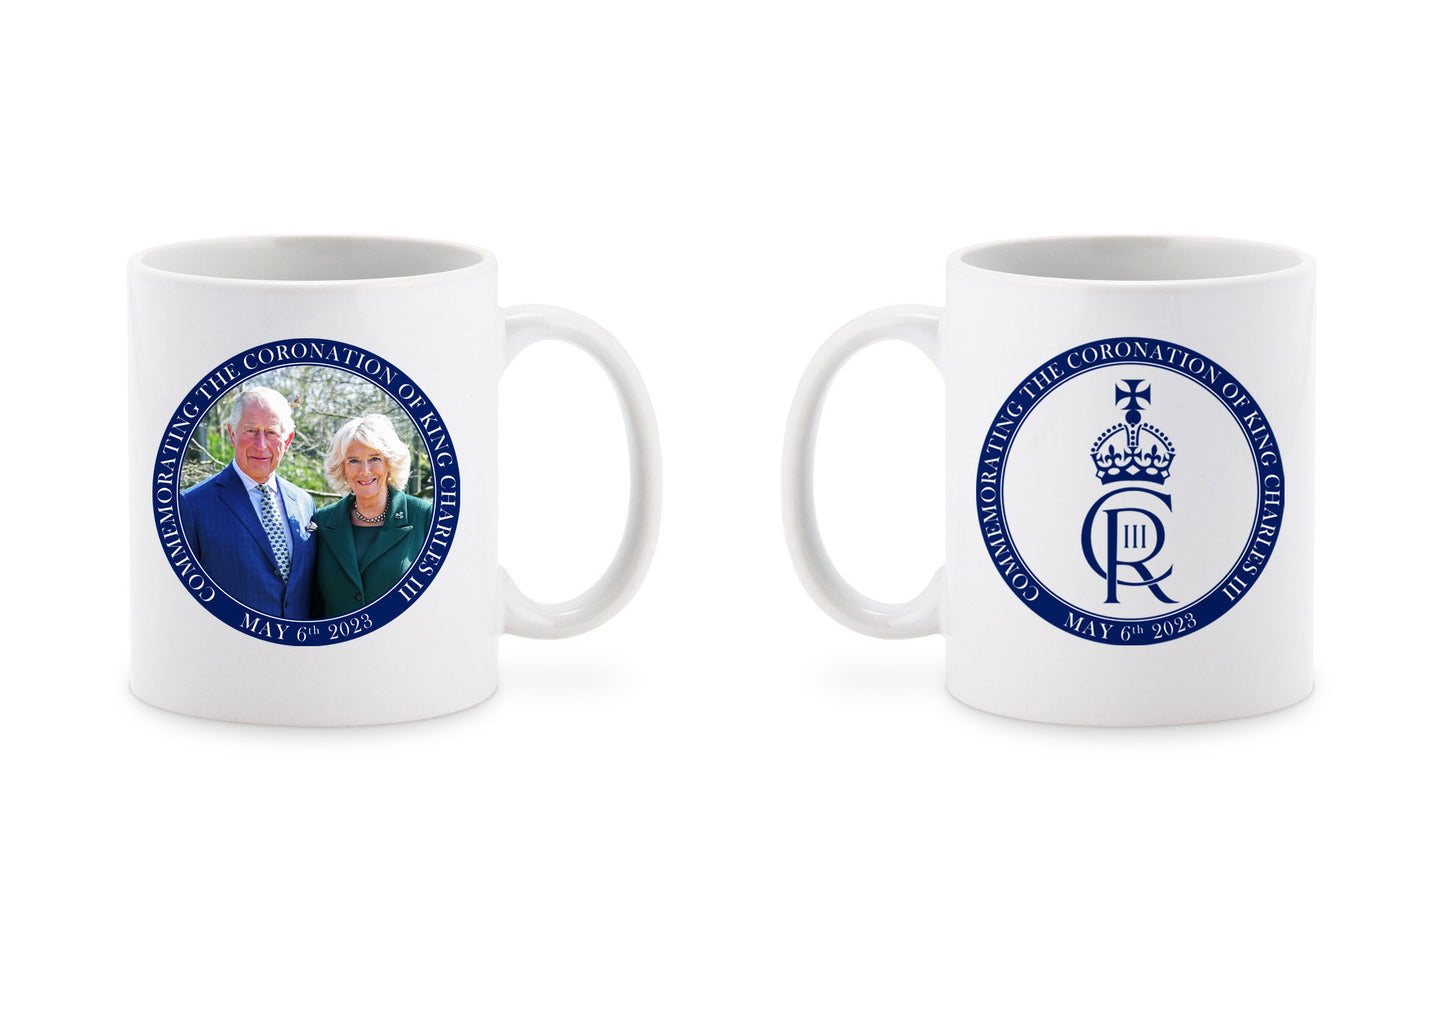 King Charles III and Queen Consort Camilla Portrait Mug Memorabilia King's Coronation Coffee Tea Cup Commemorative Souvenirs Gift His Majesty, White